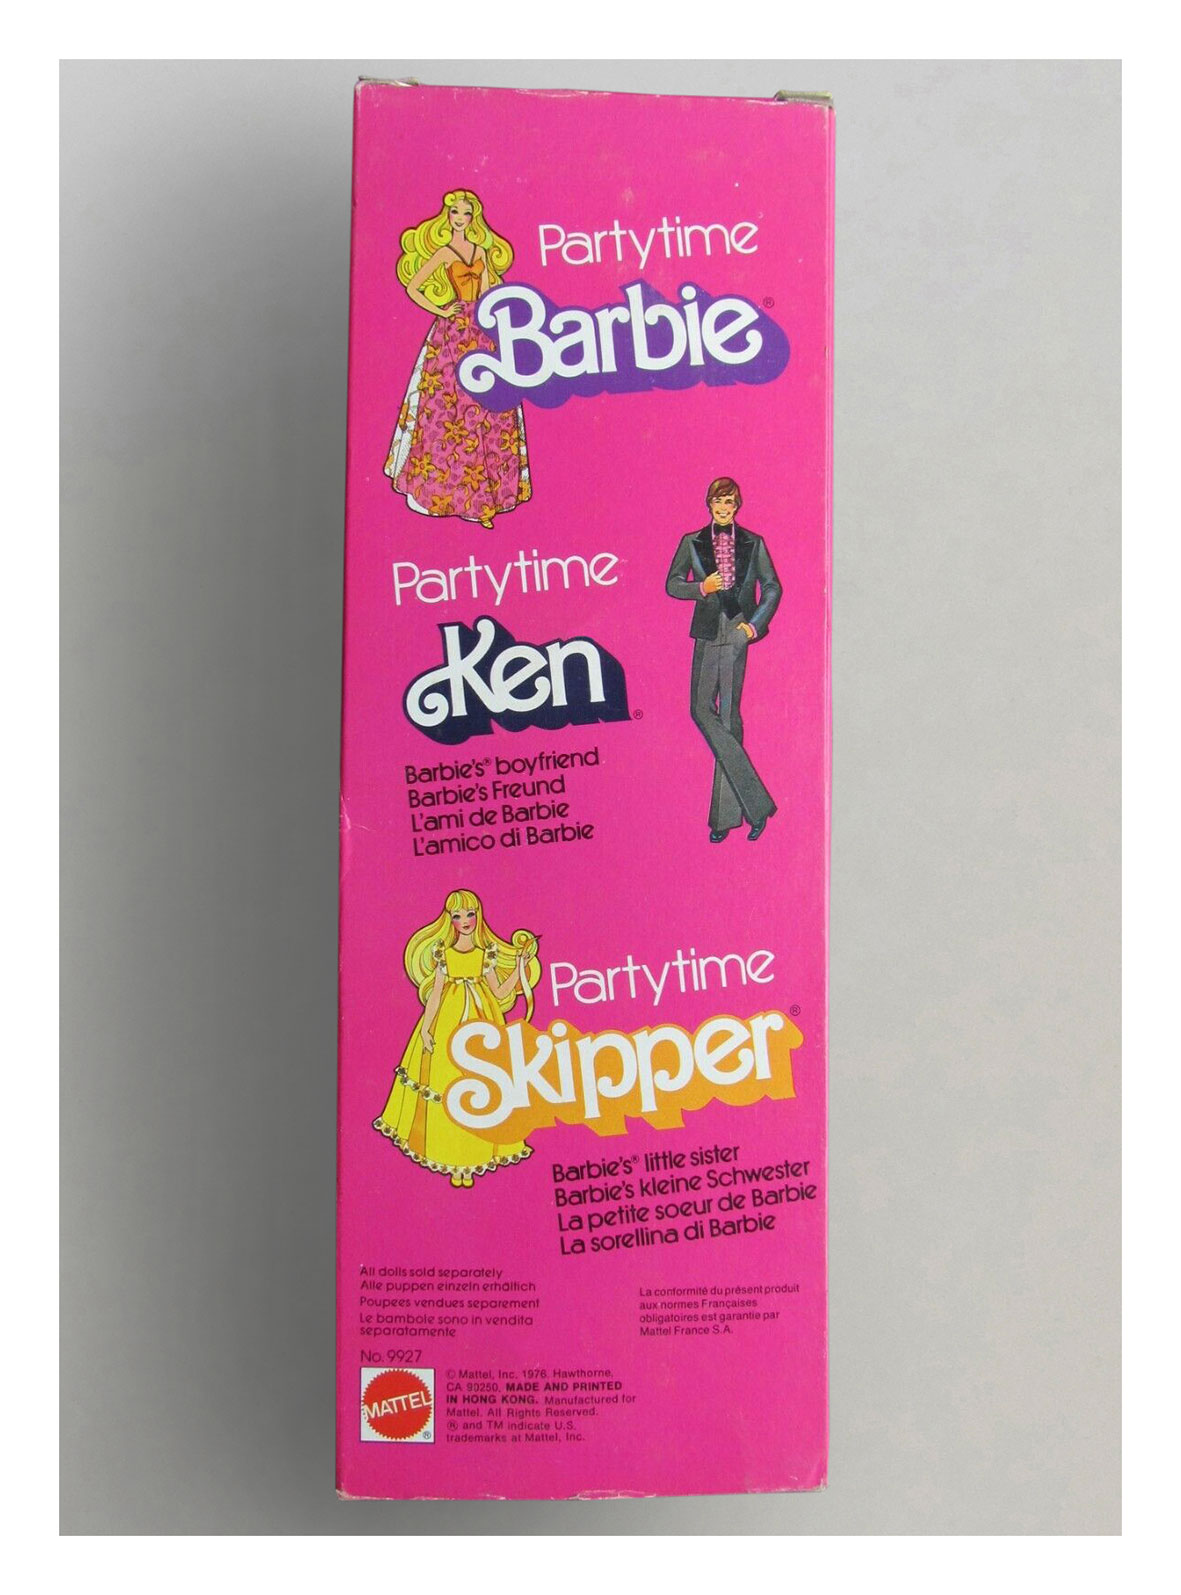 1977 #9927 Partytime Ken European packaging